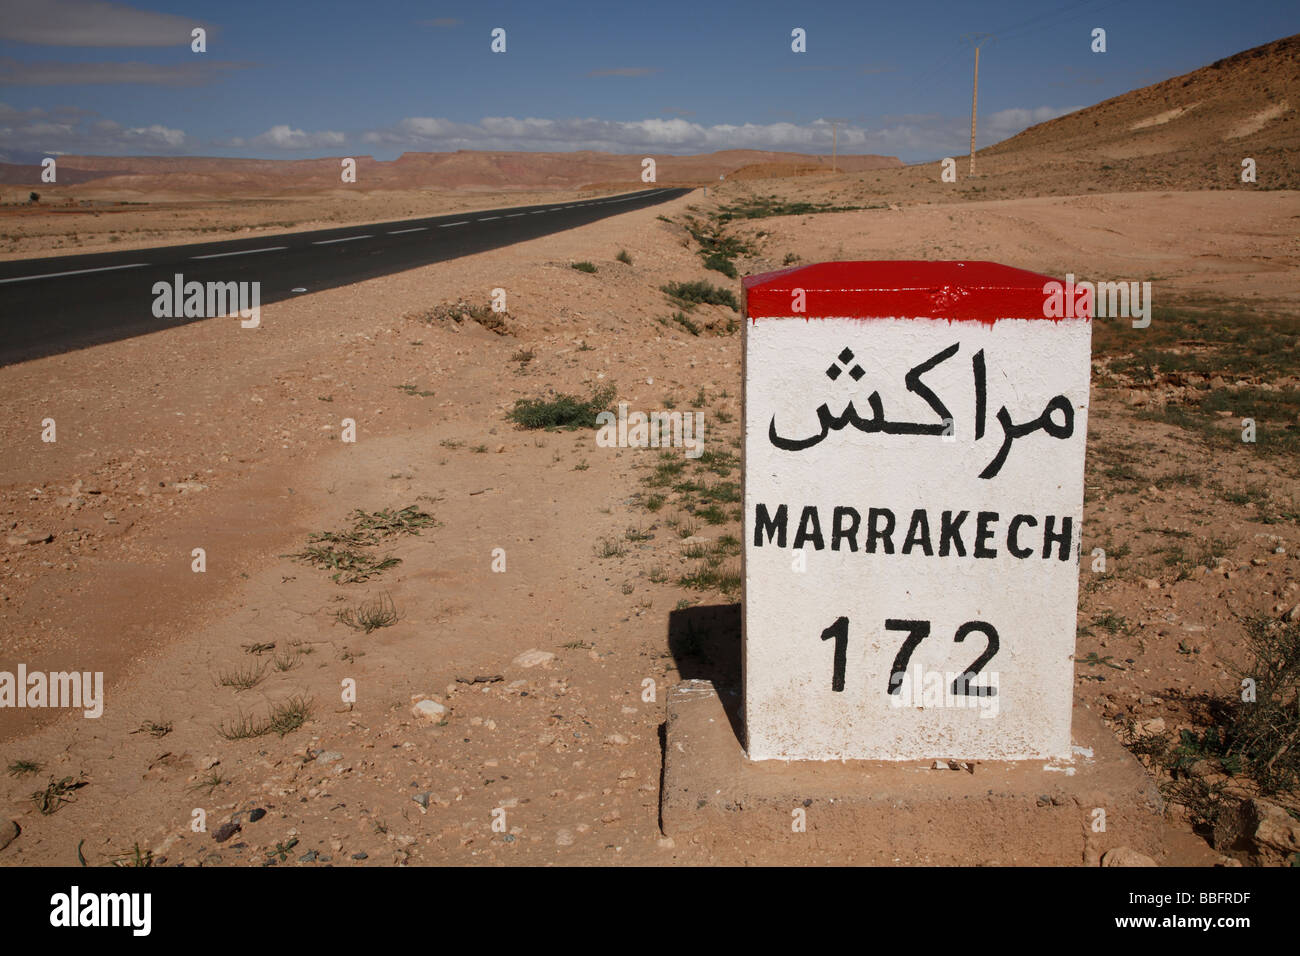 Africa, North Africa, Morocco, Atlas Region, Desert, Marrakech Road Sign, 172 km Stock Photo